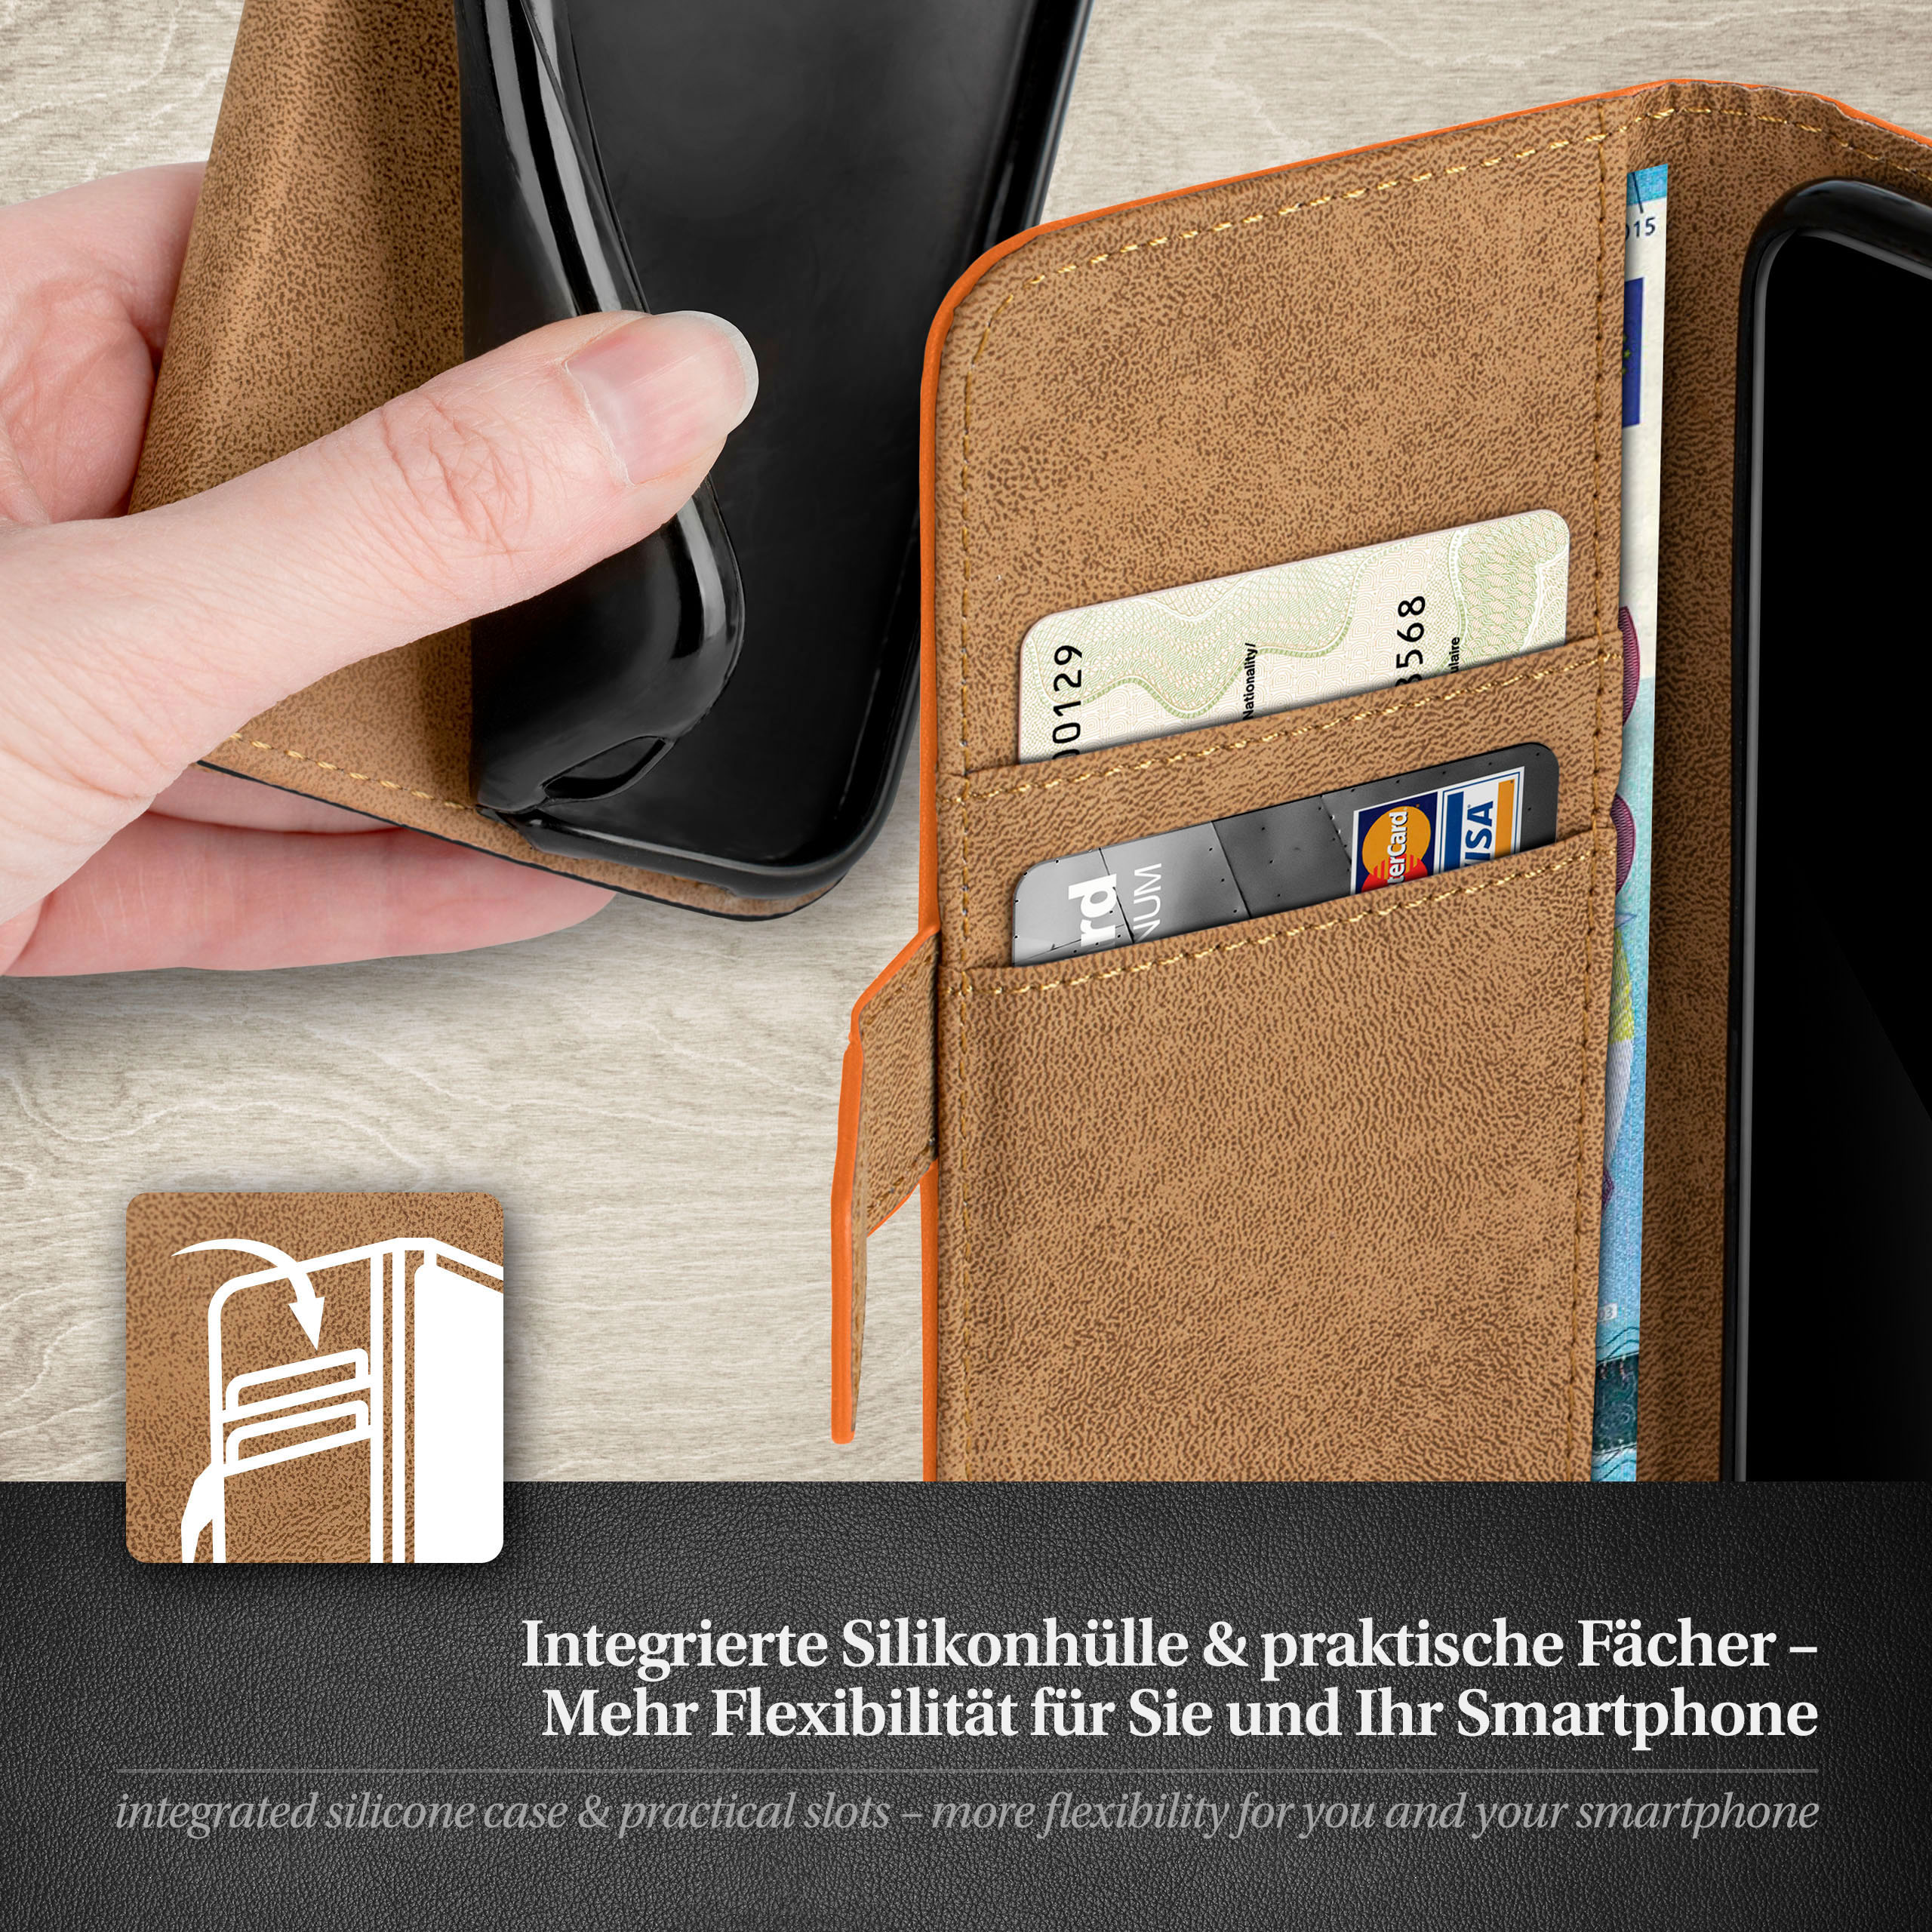 S3 S3 Galaxy Bookcover, Neo, Samsung, MOEX Canyon-Orange / Case, Book